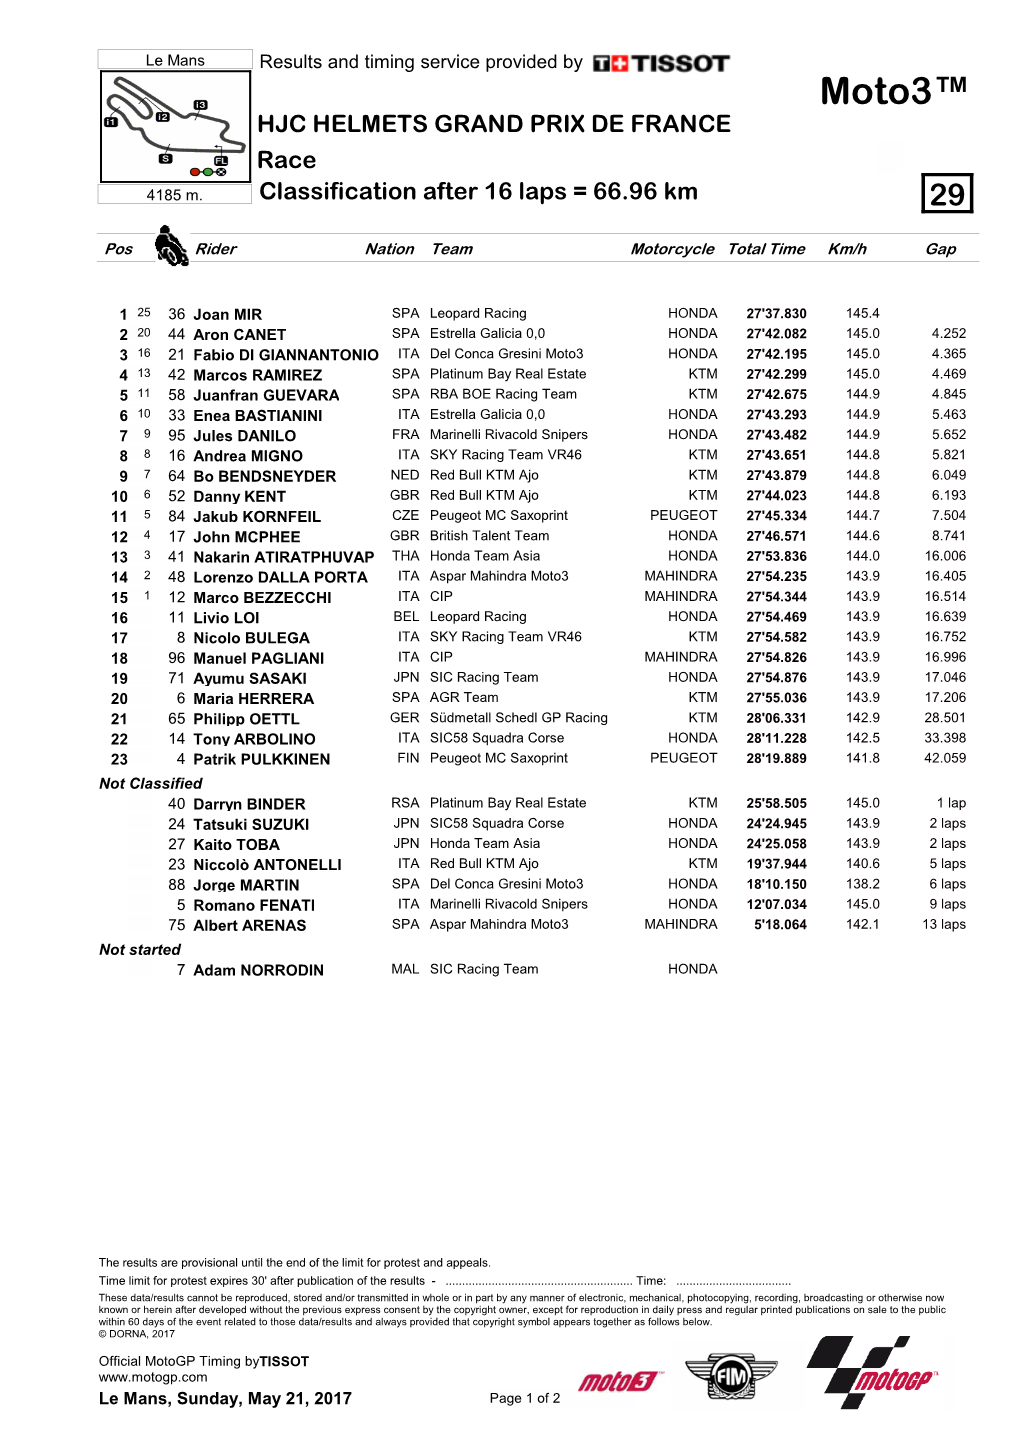 Moto3™ HJC HELMETS GRAND PRIX DE FRANCE Race 4185 M